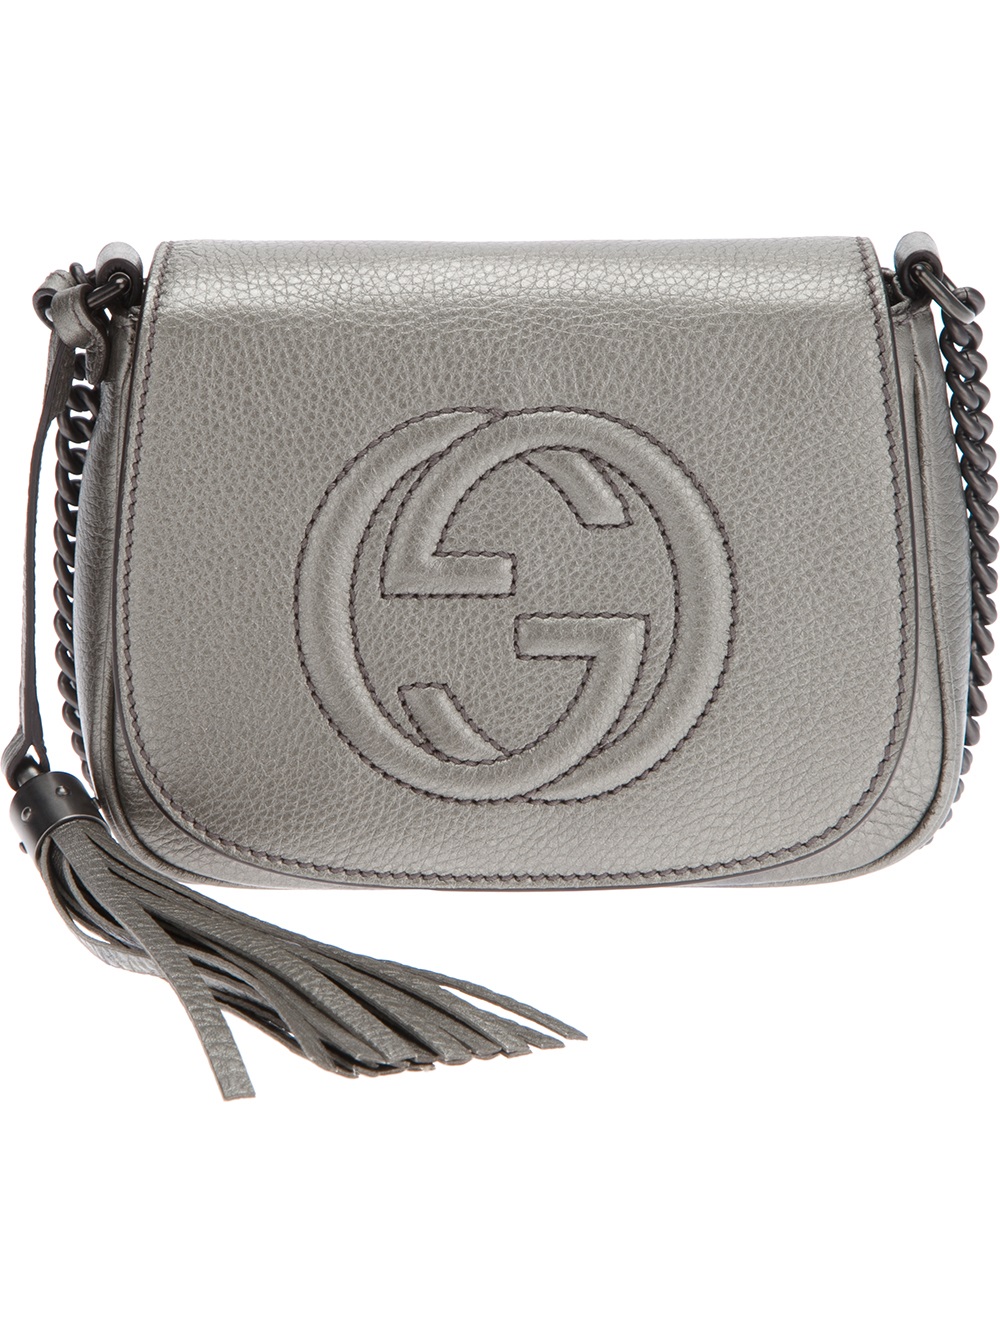 Gucci Small Soho Shoulder Bag in Gray (grey) | Lyst